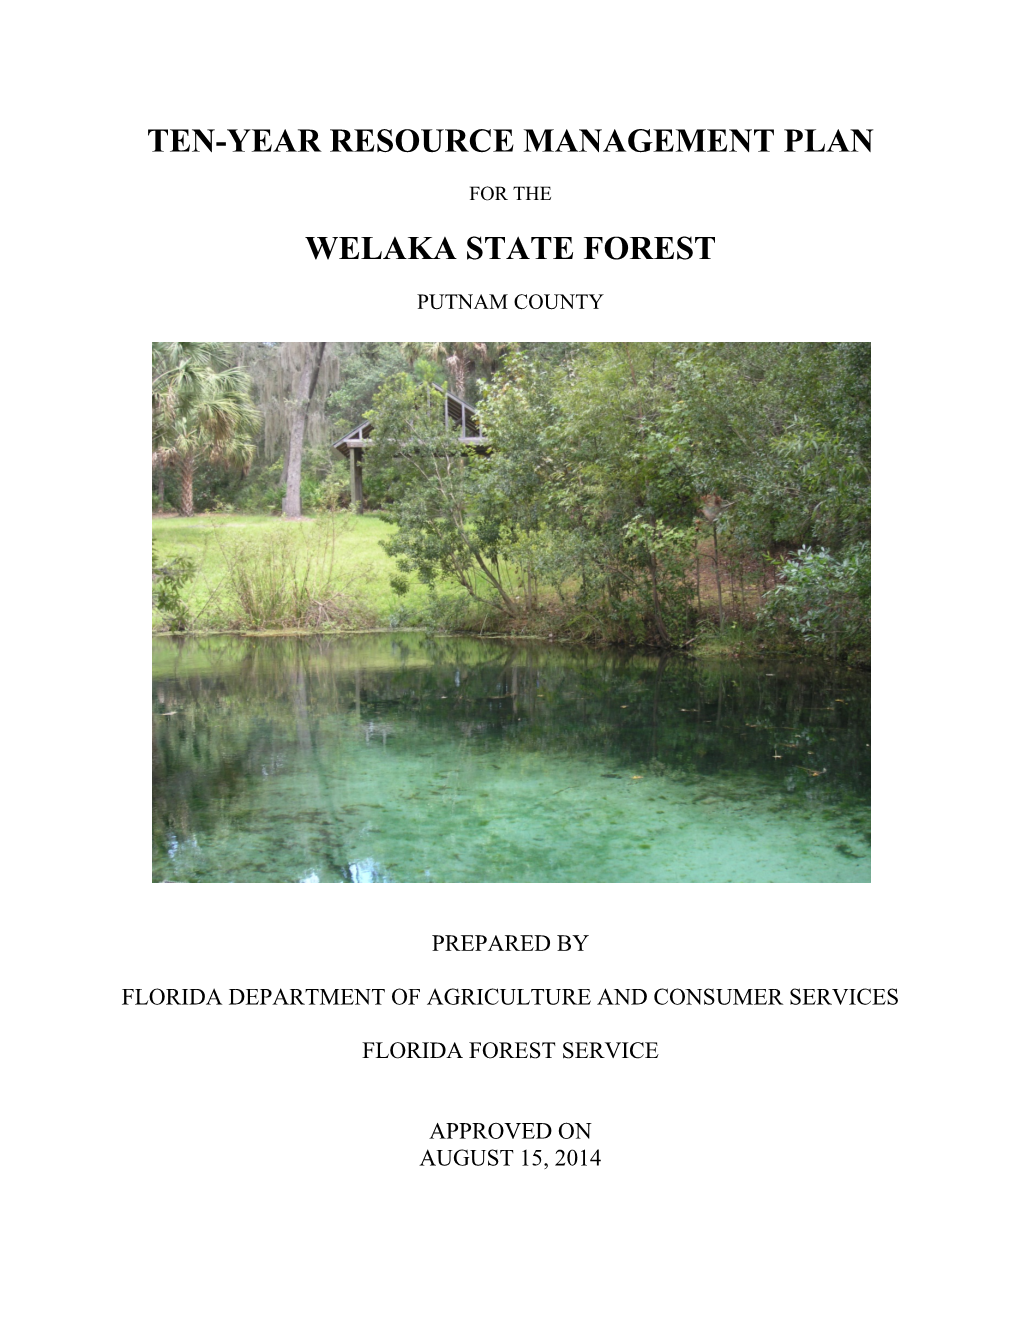 Welaka State Forest Management Plan